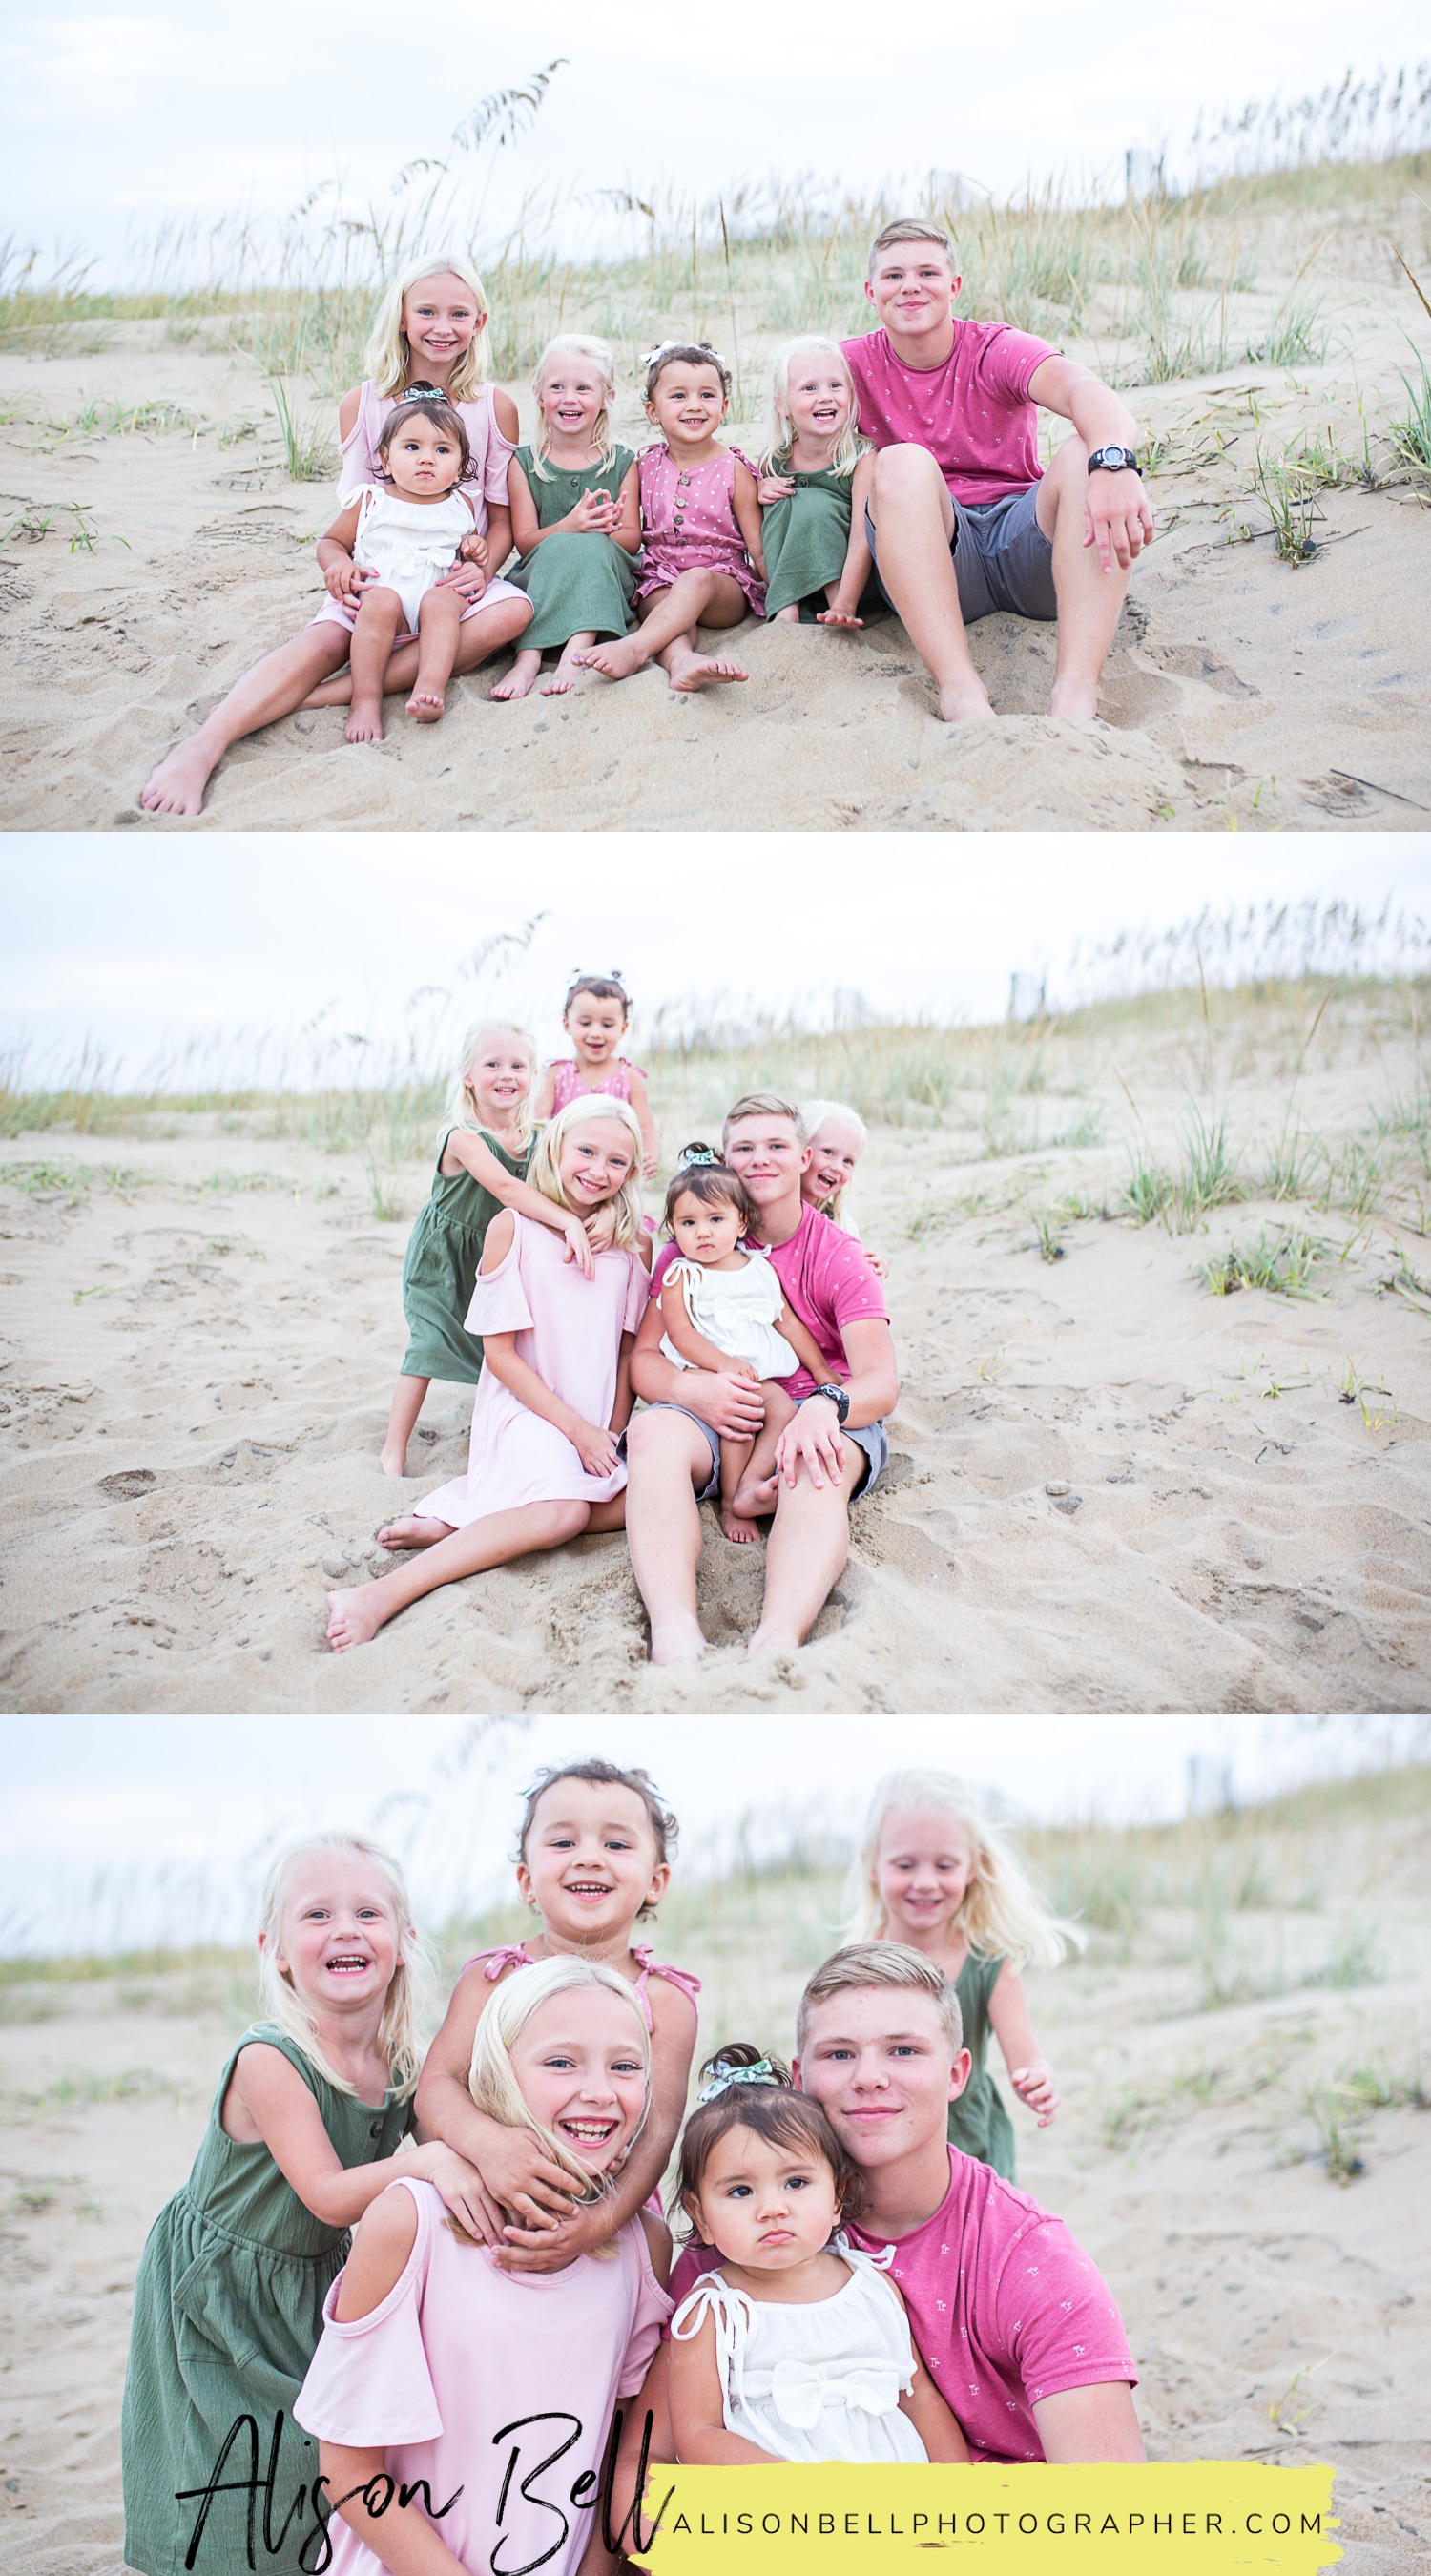 Sandbridge Beach photo session with extended family by alison bell photographer alisonbellphotographer.com 